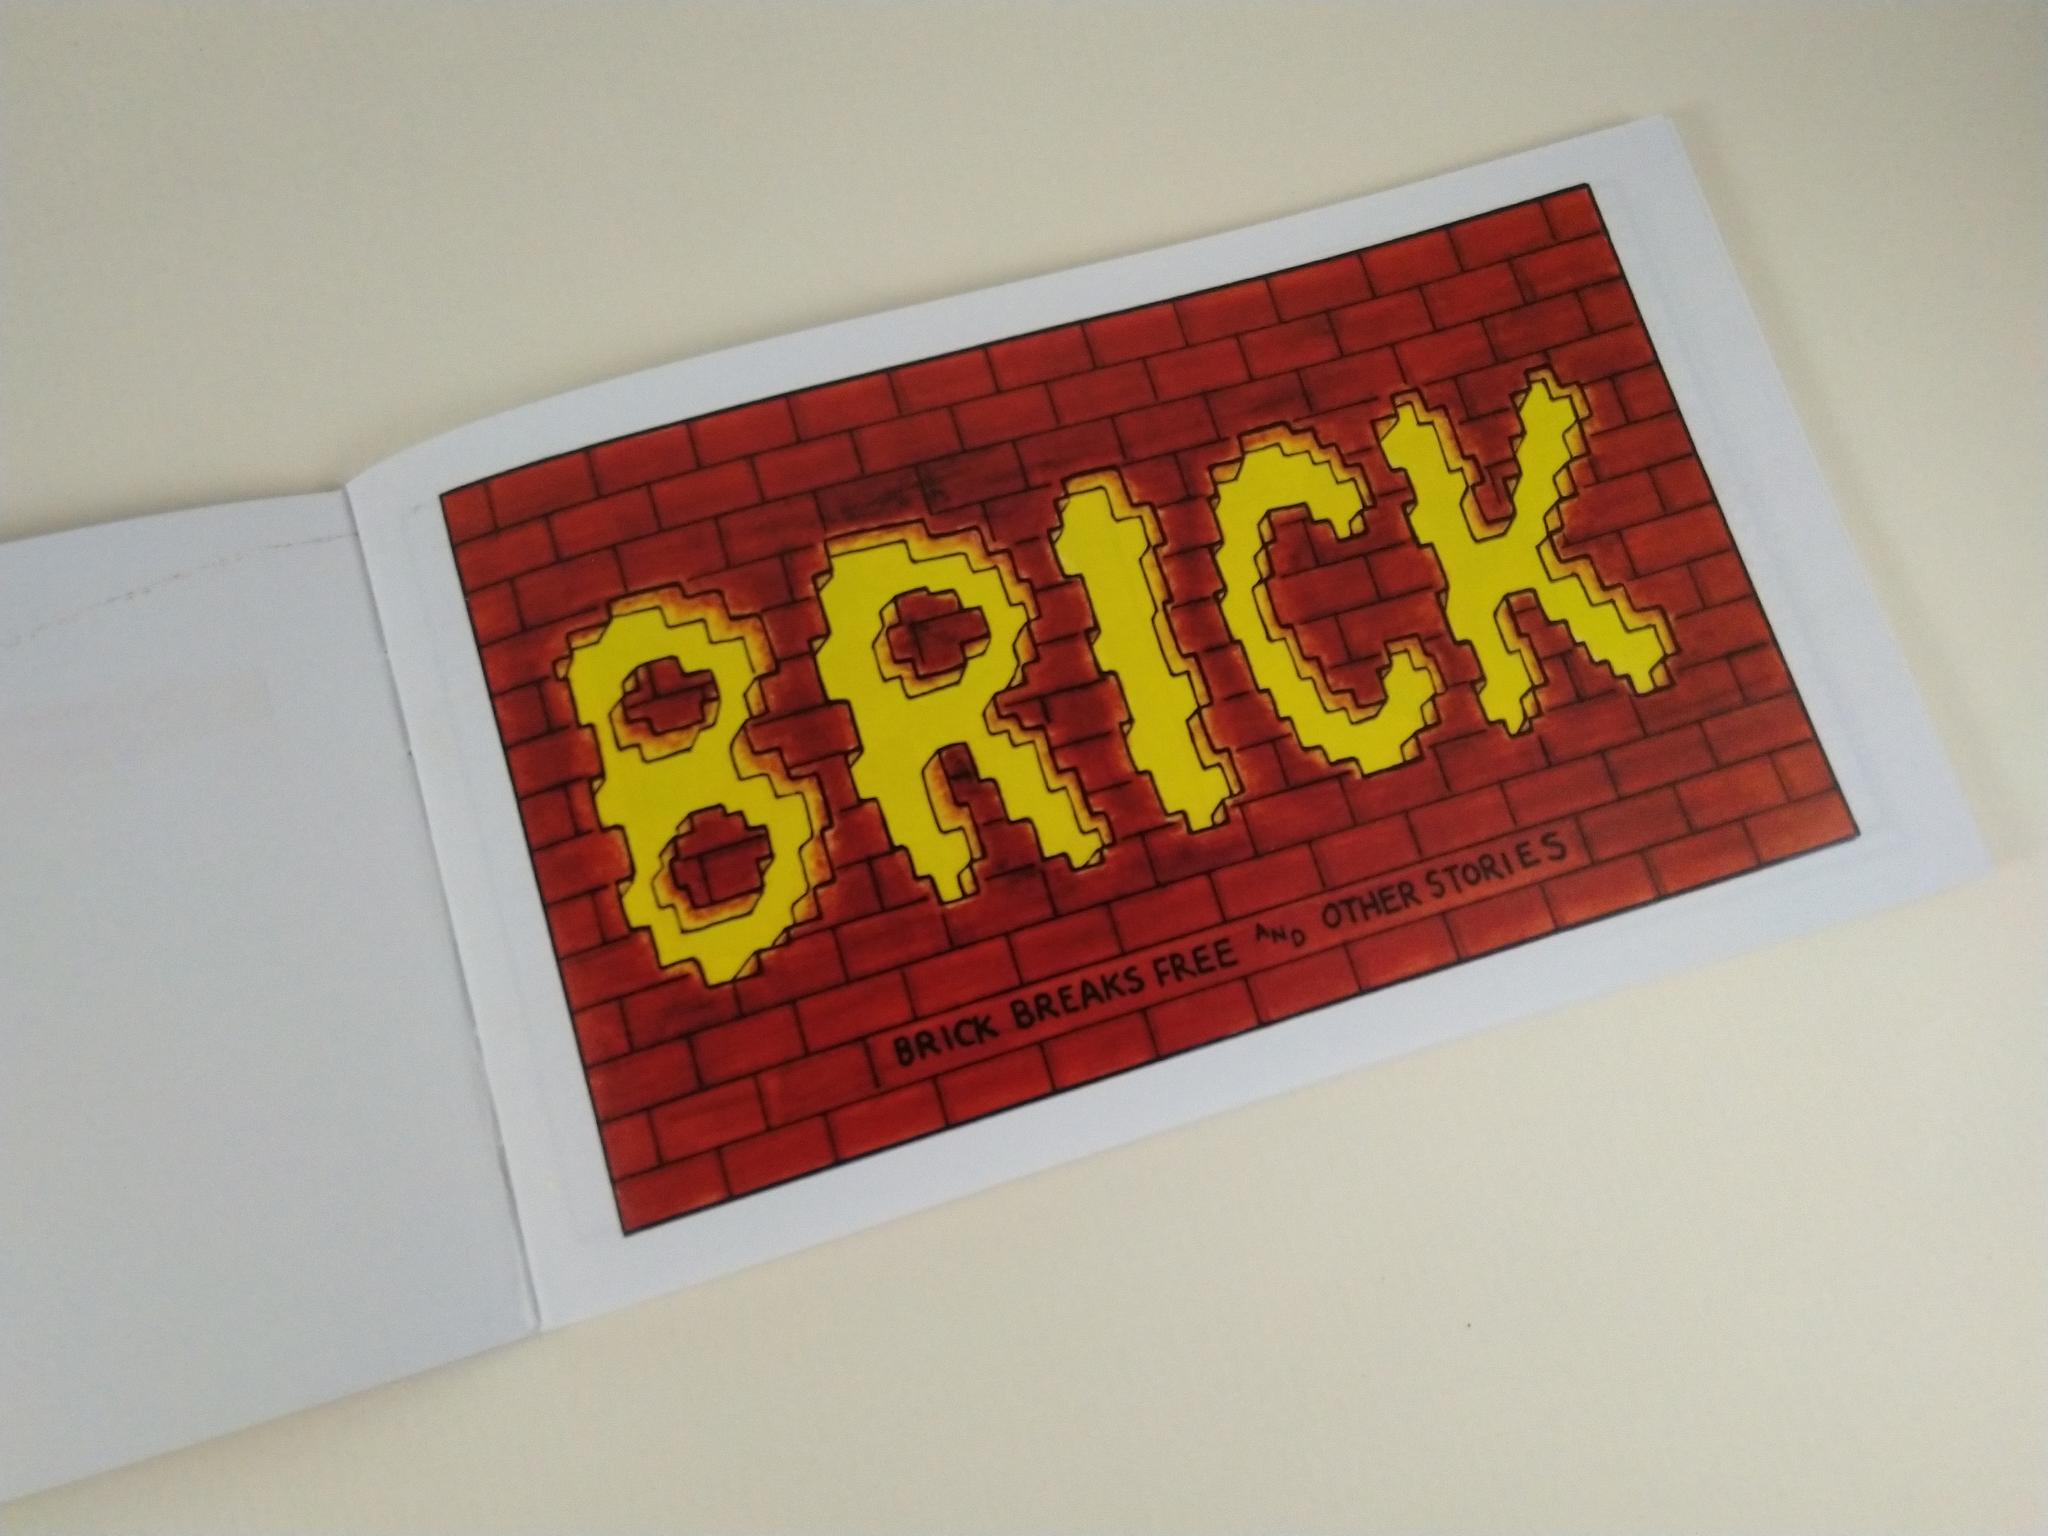 Brick Breaks Free